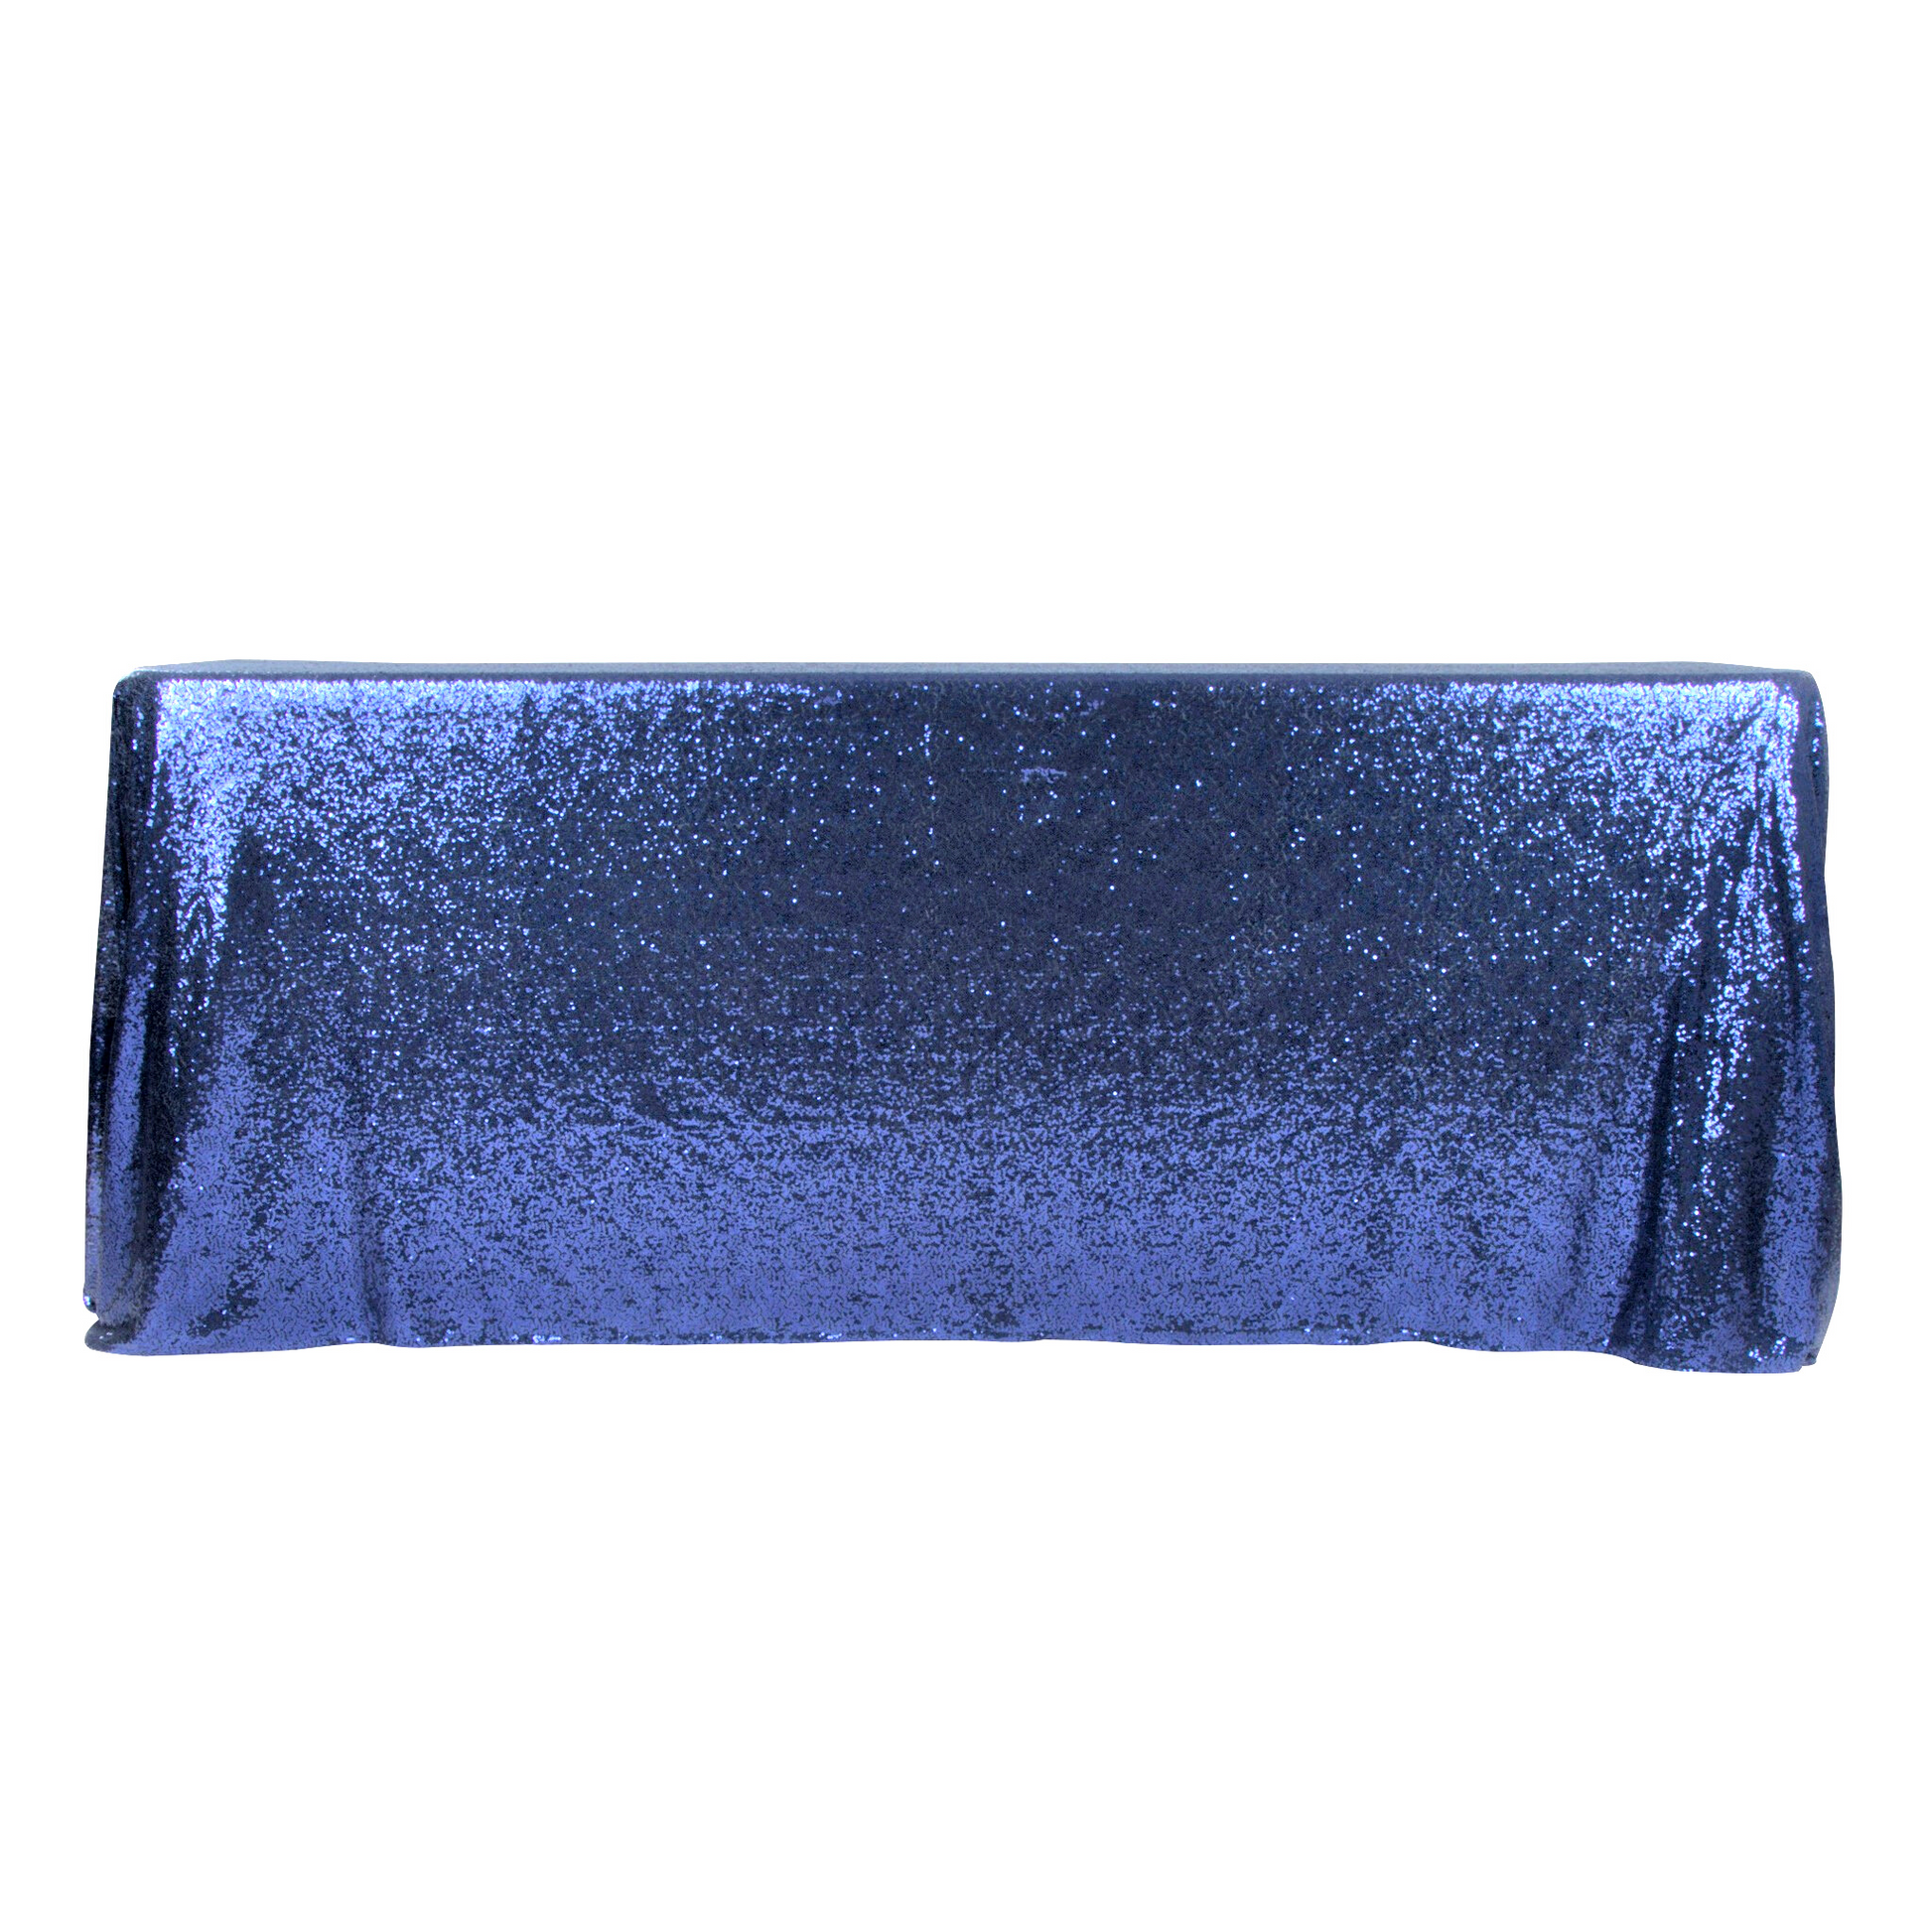 Glitz Sequin Mesh Net Tablecloth 90"x156" Rectangular - Navy Blue